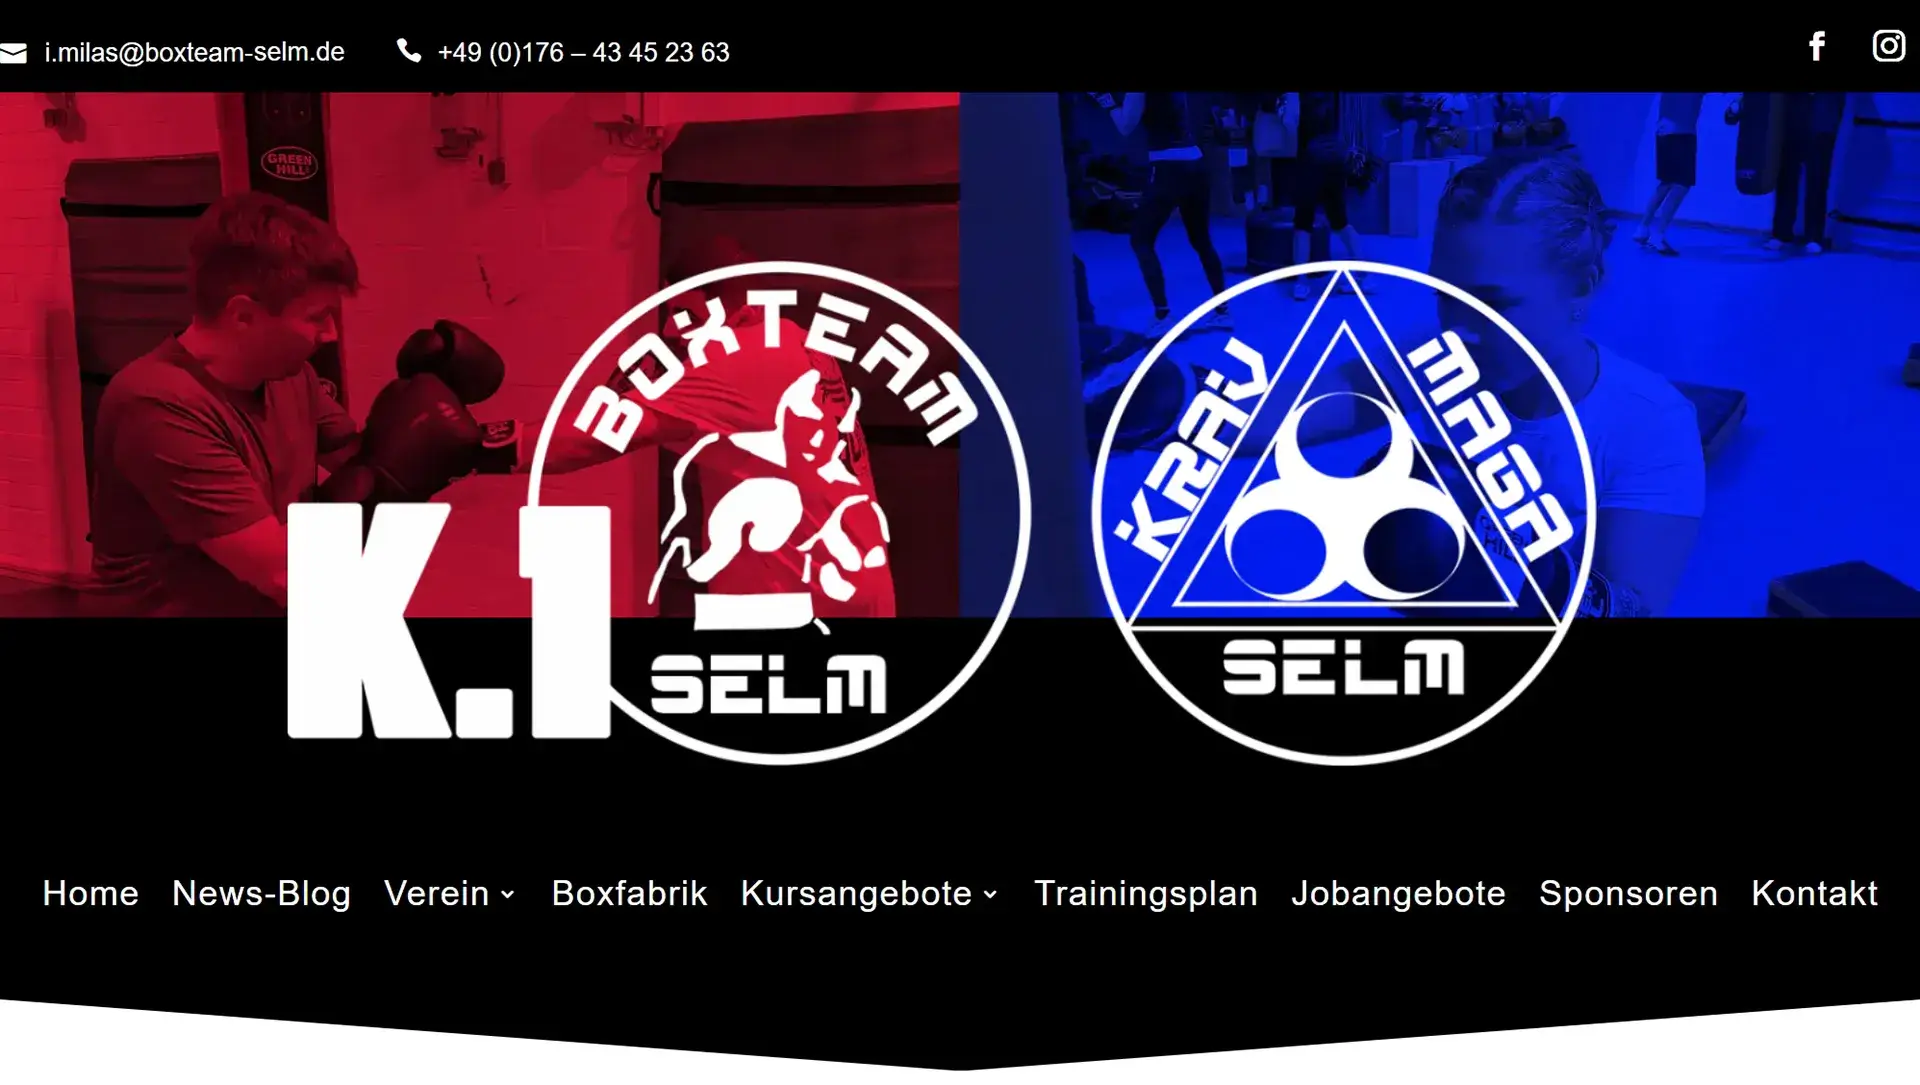 K.1-Boxteam Selm e.V. - Website August 2022 - Header